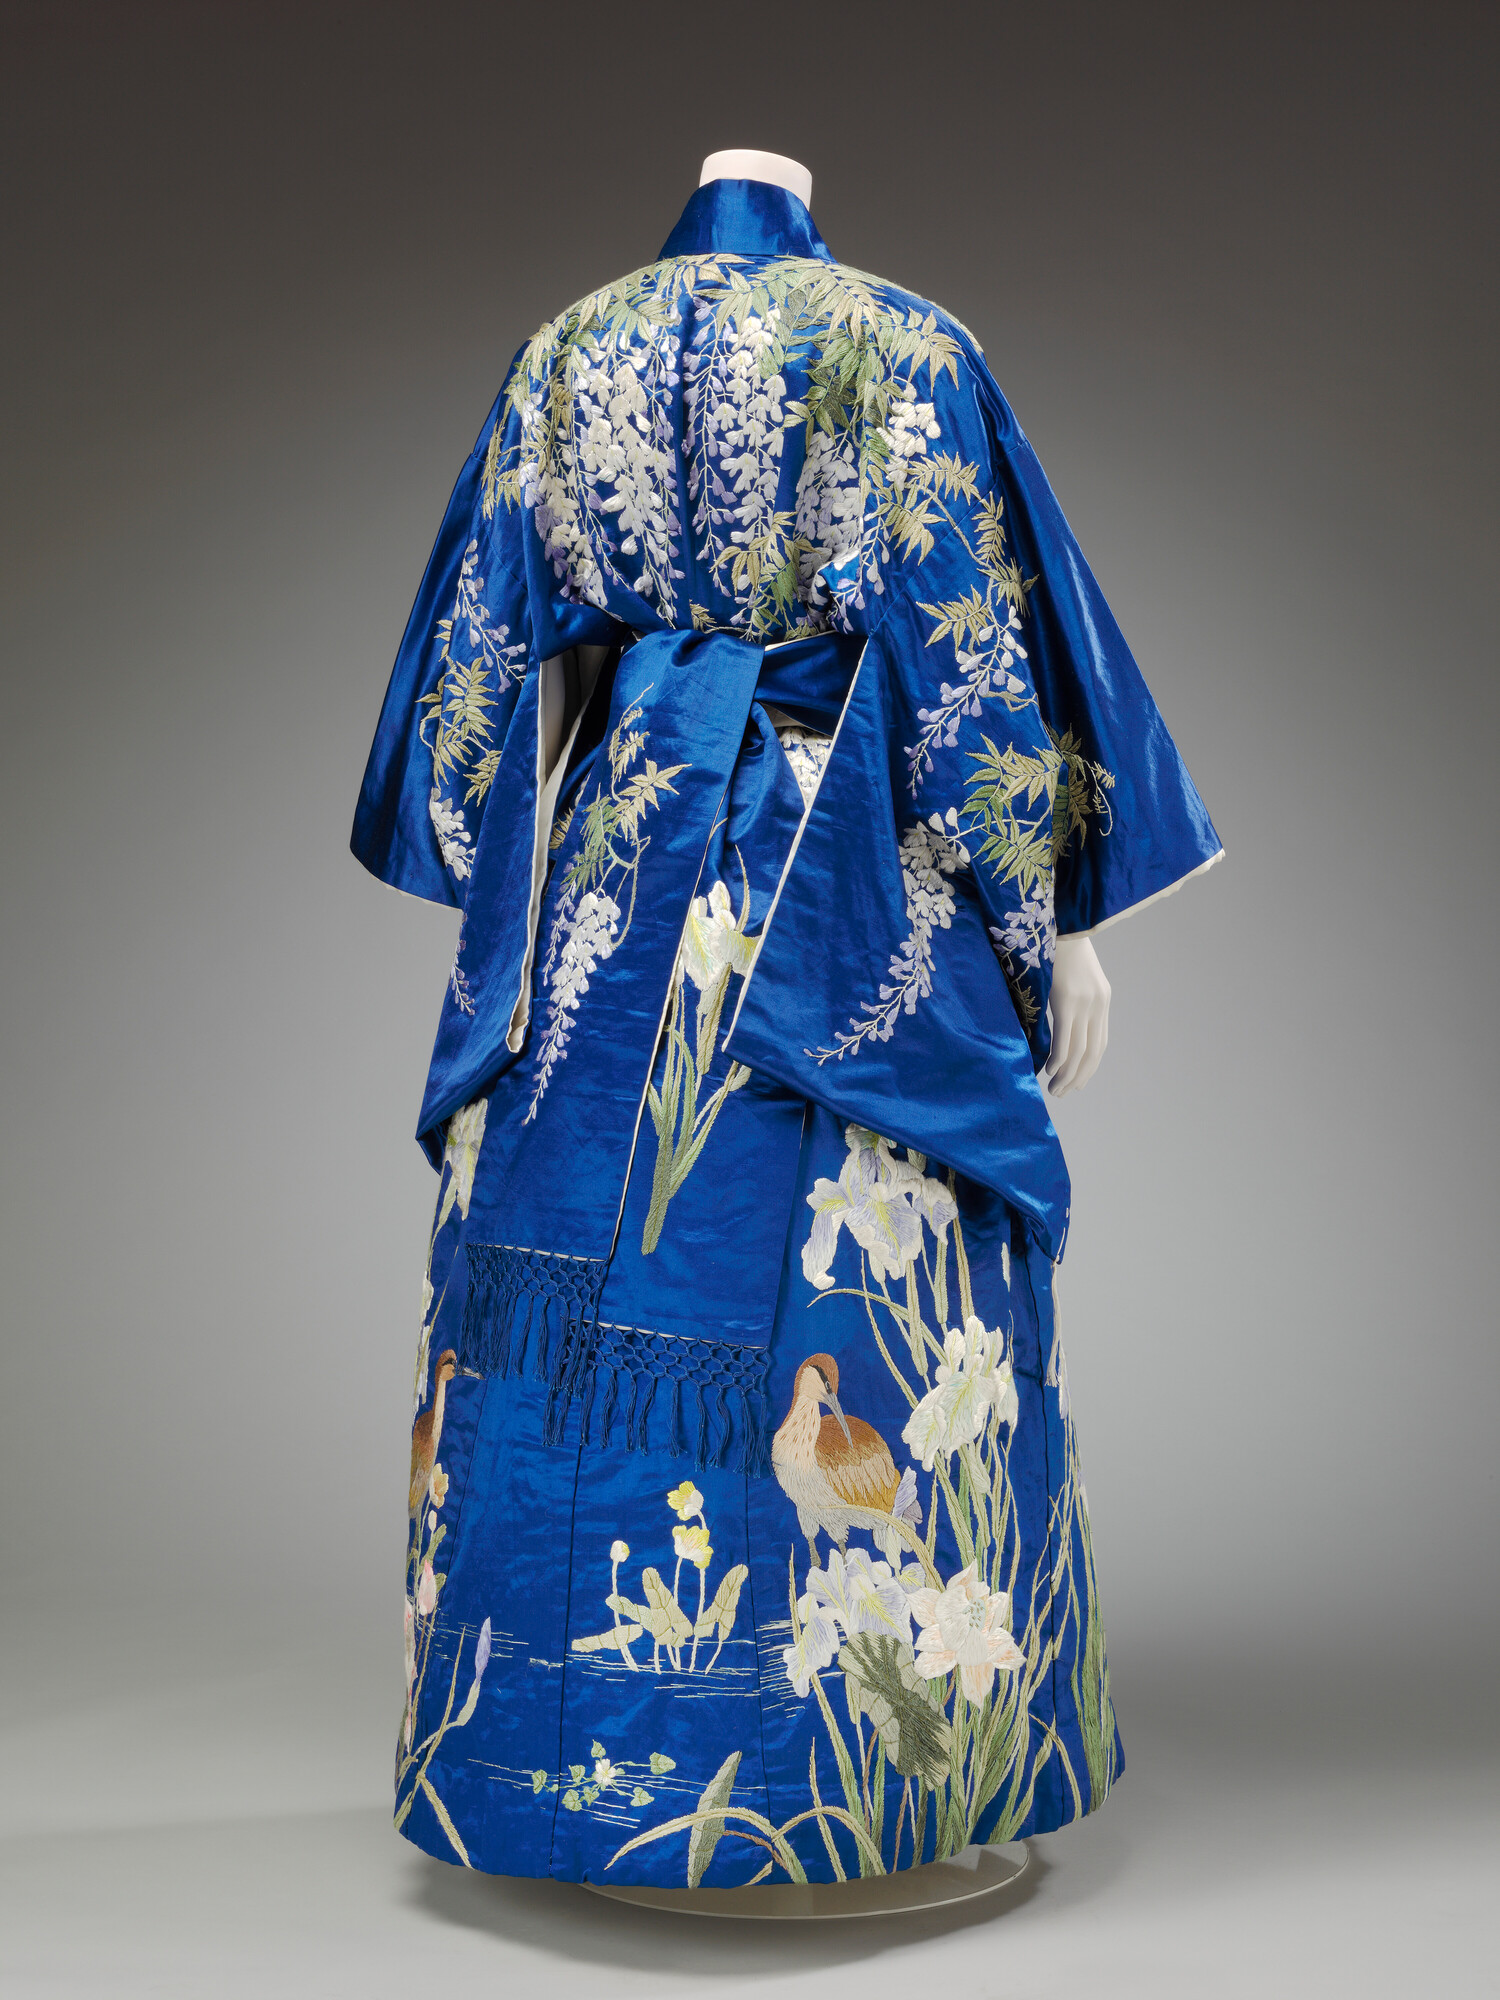 A blue kimono with white designs